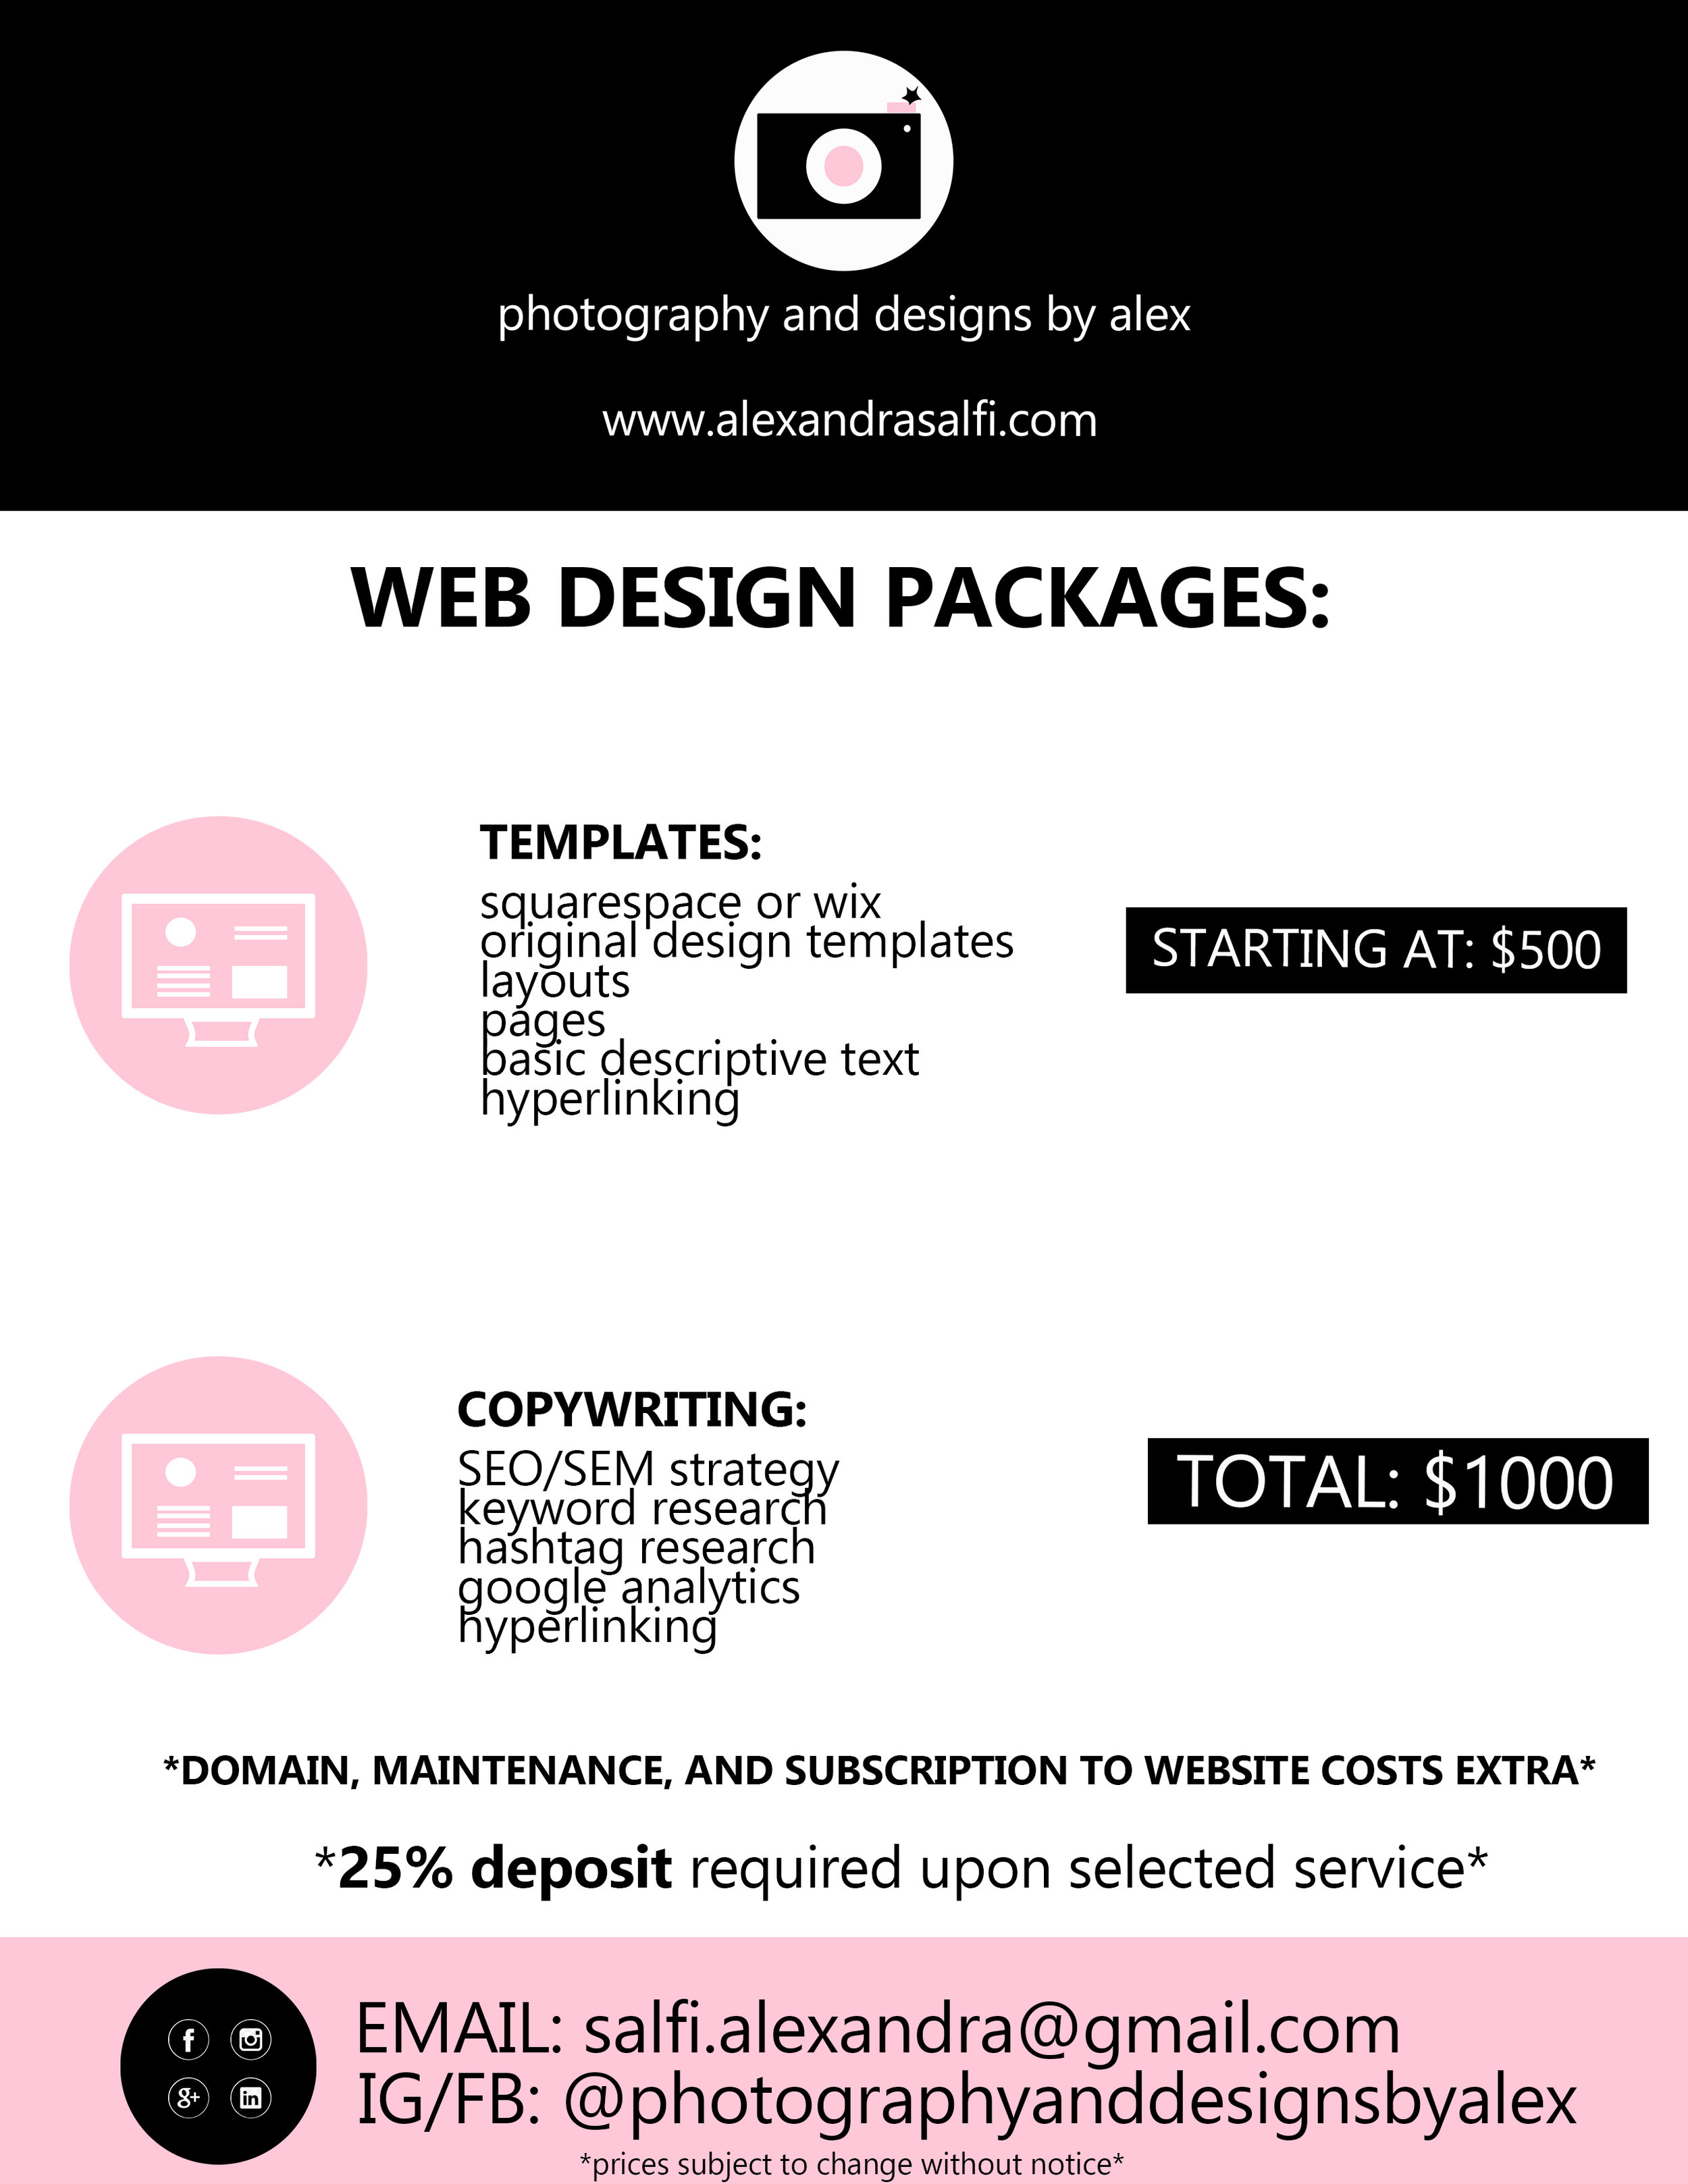 webdesignpackage.png